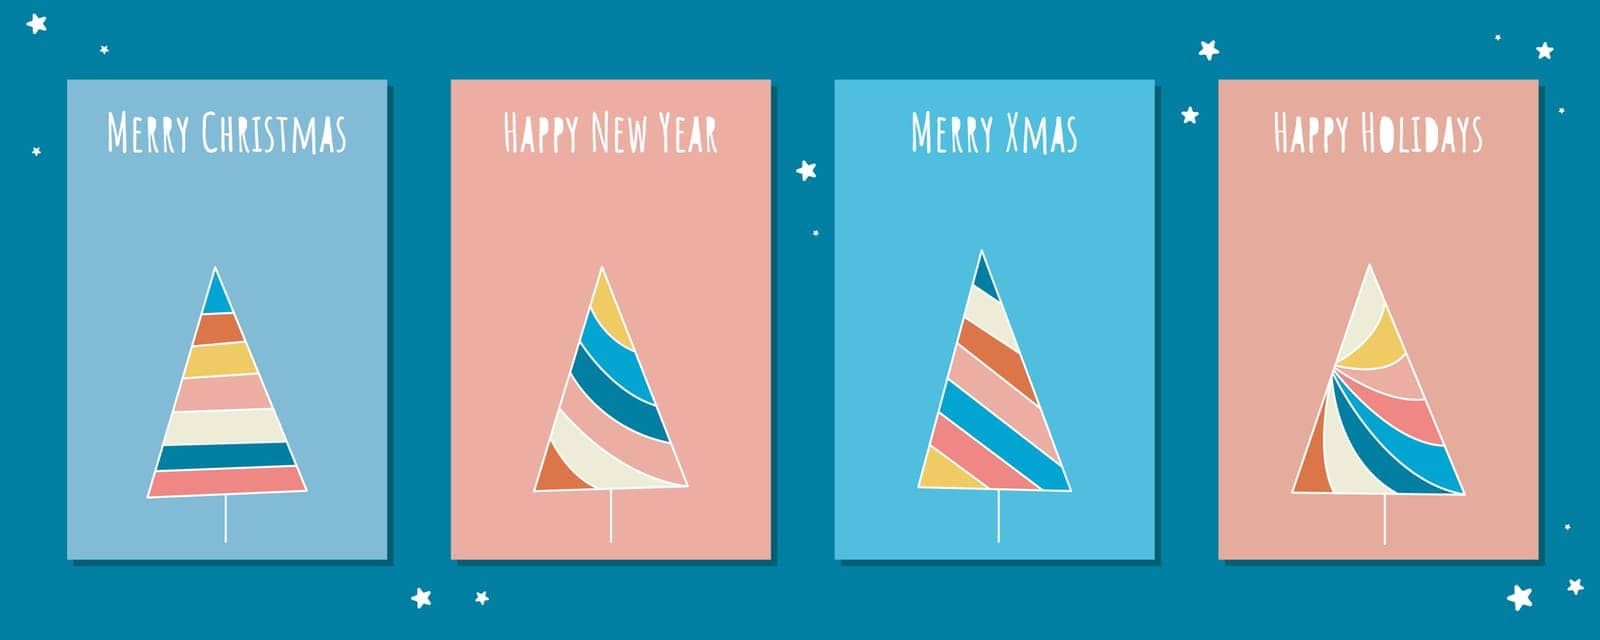 Festive Christmas cards set vector illustration by TassiaK